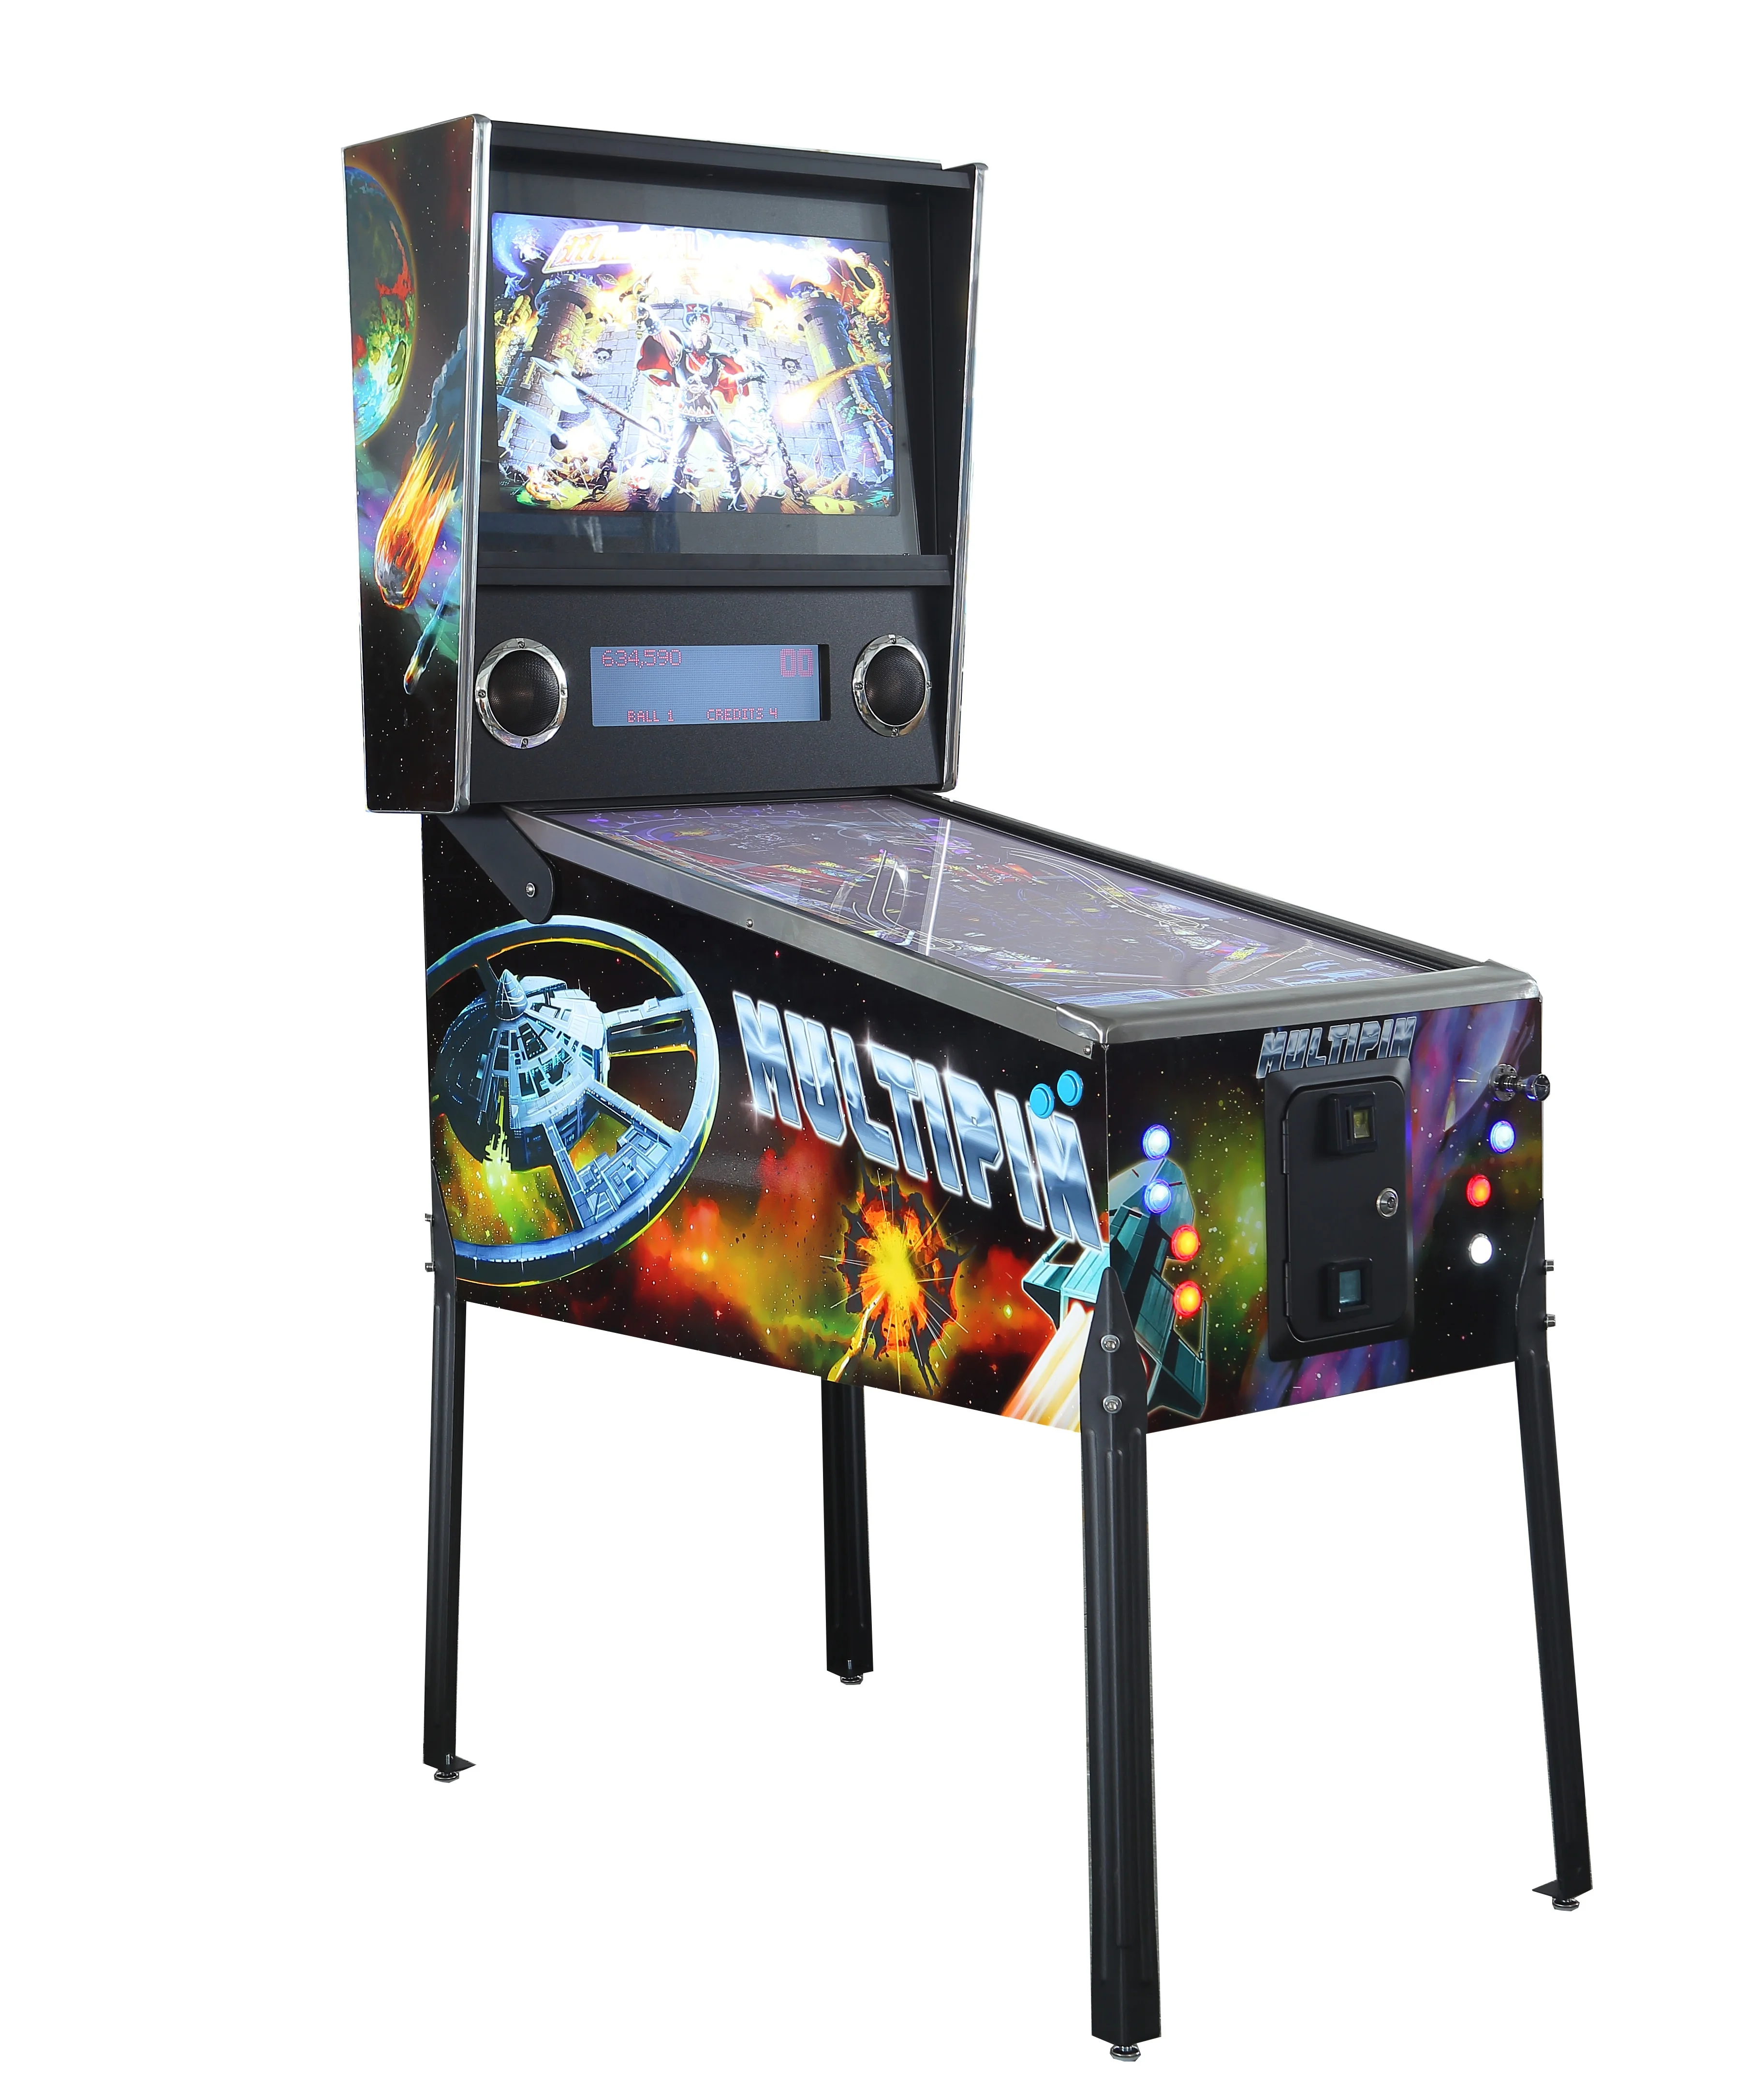 Moeda de diversões Pressor Arcade Pinball Vídeo Loteria máquina